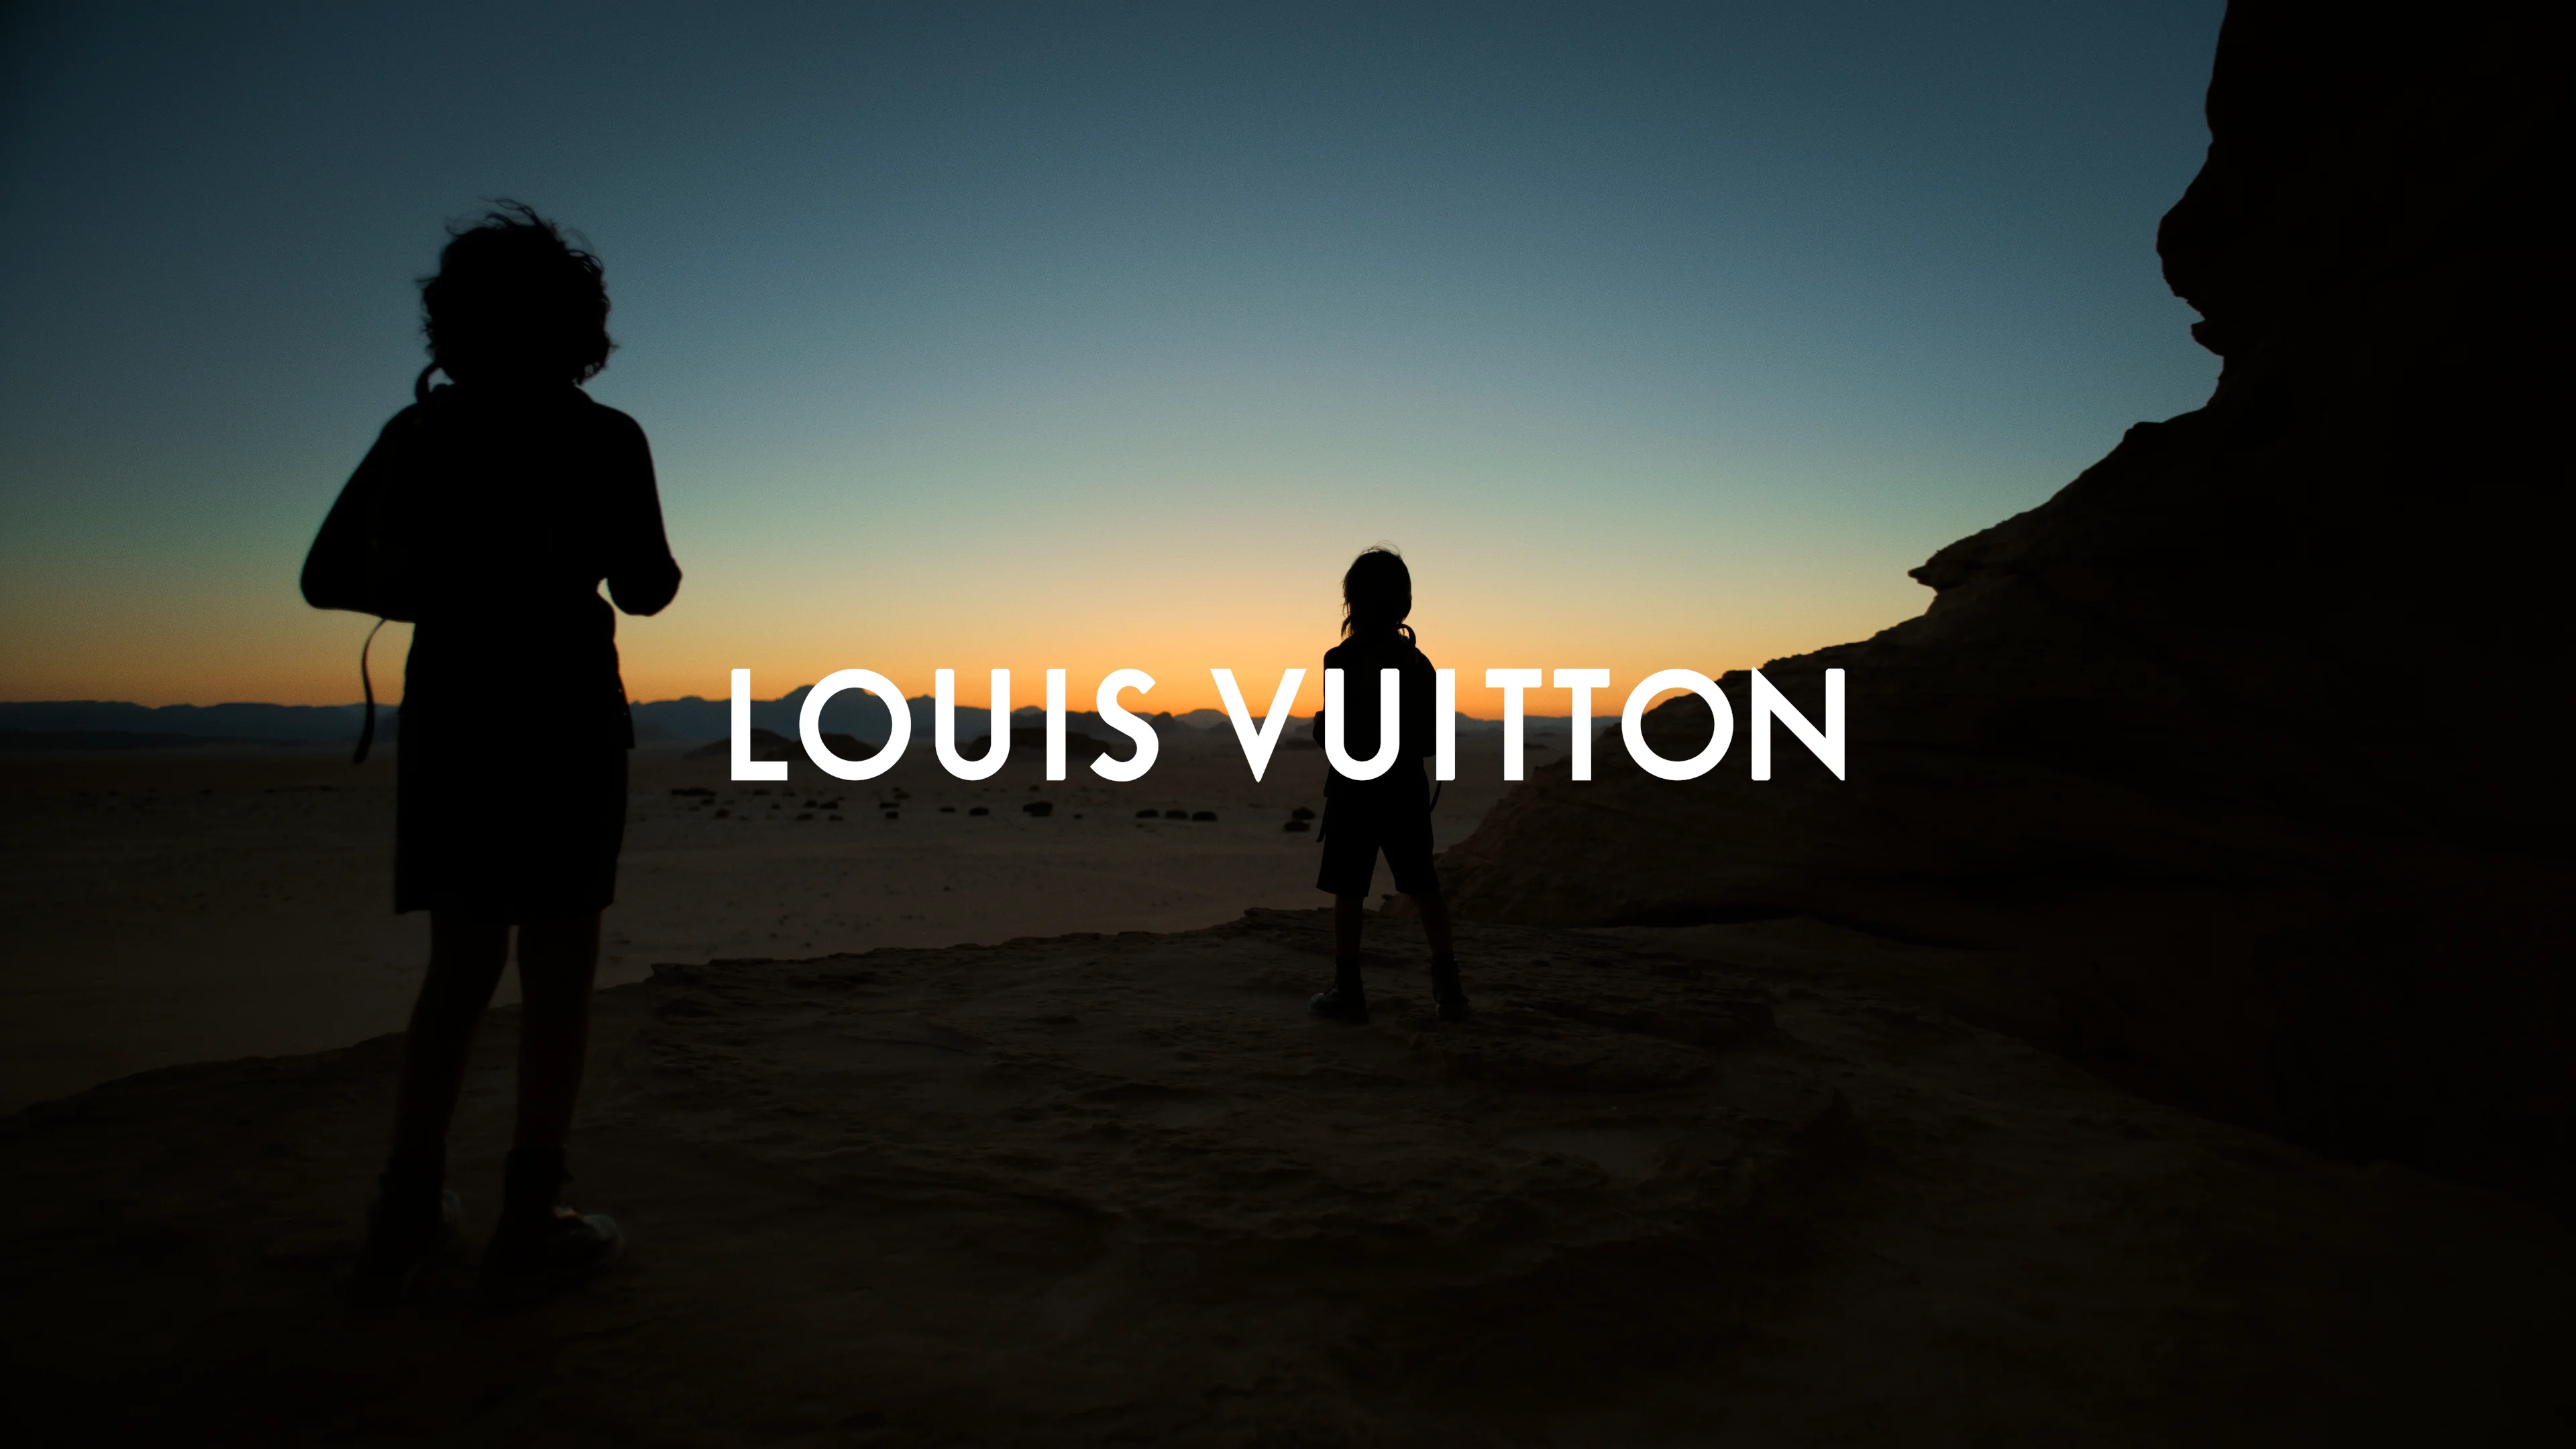 Louis Vuitton - Toward A Dream 